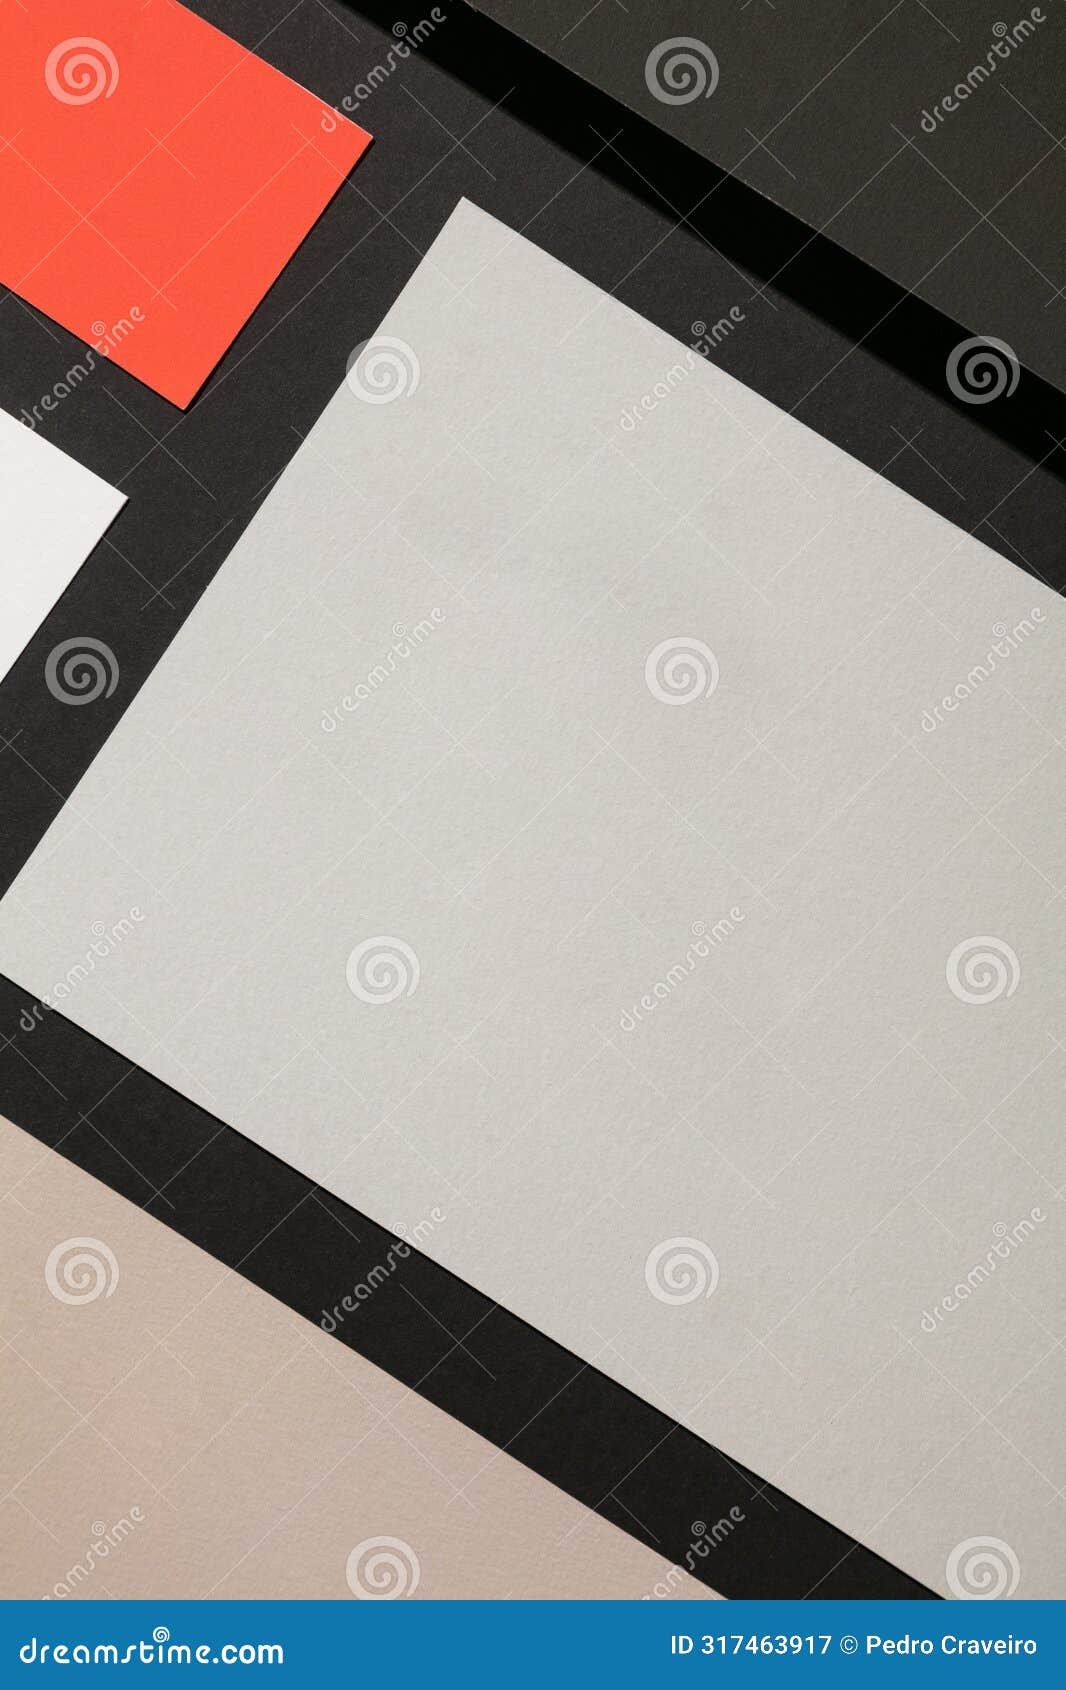 blank corporate stationery on dark background. mocks the brand. orange tones